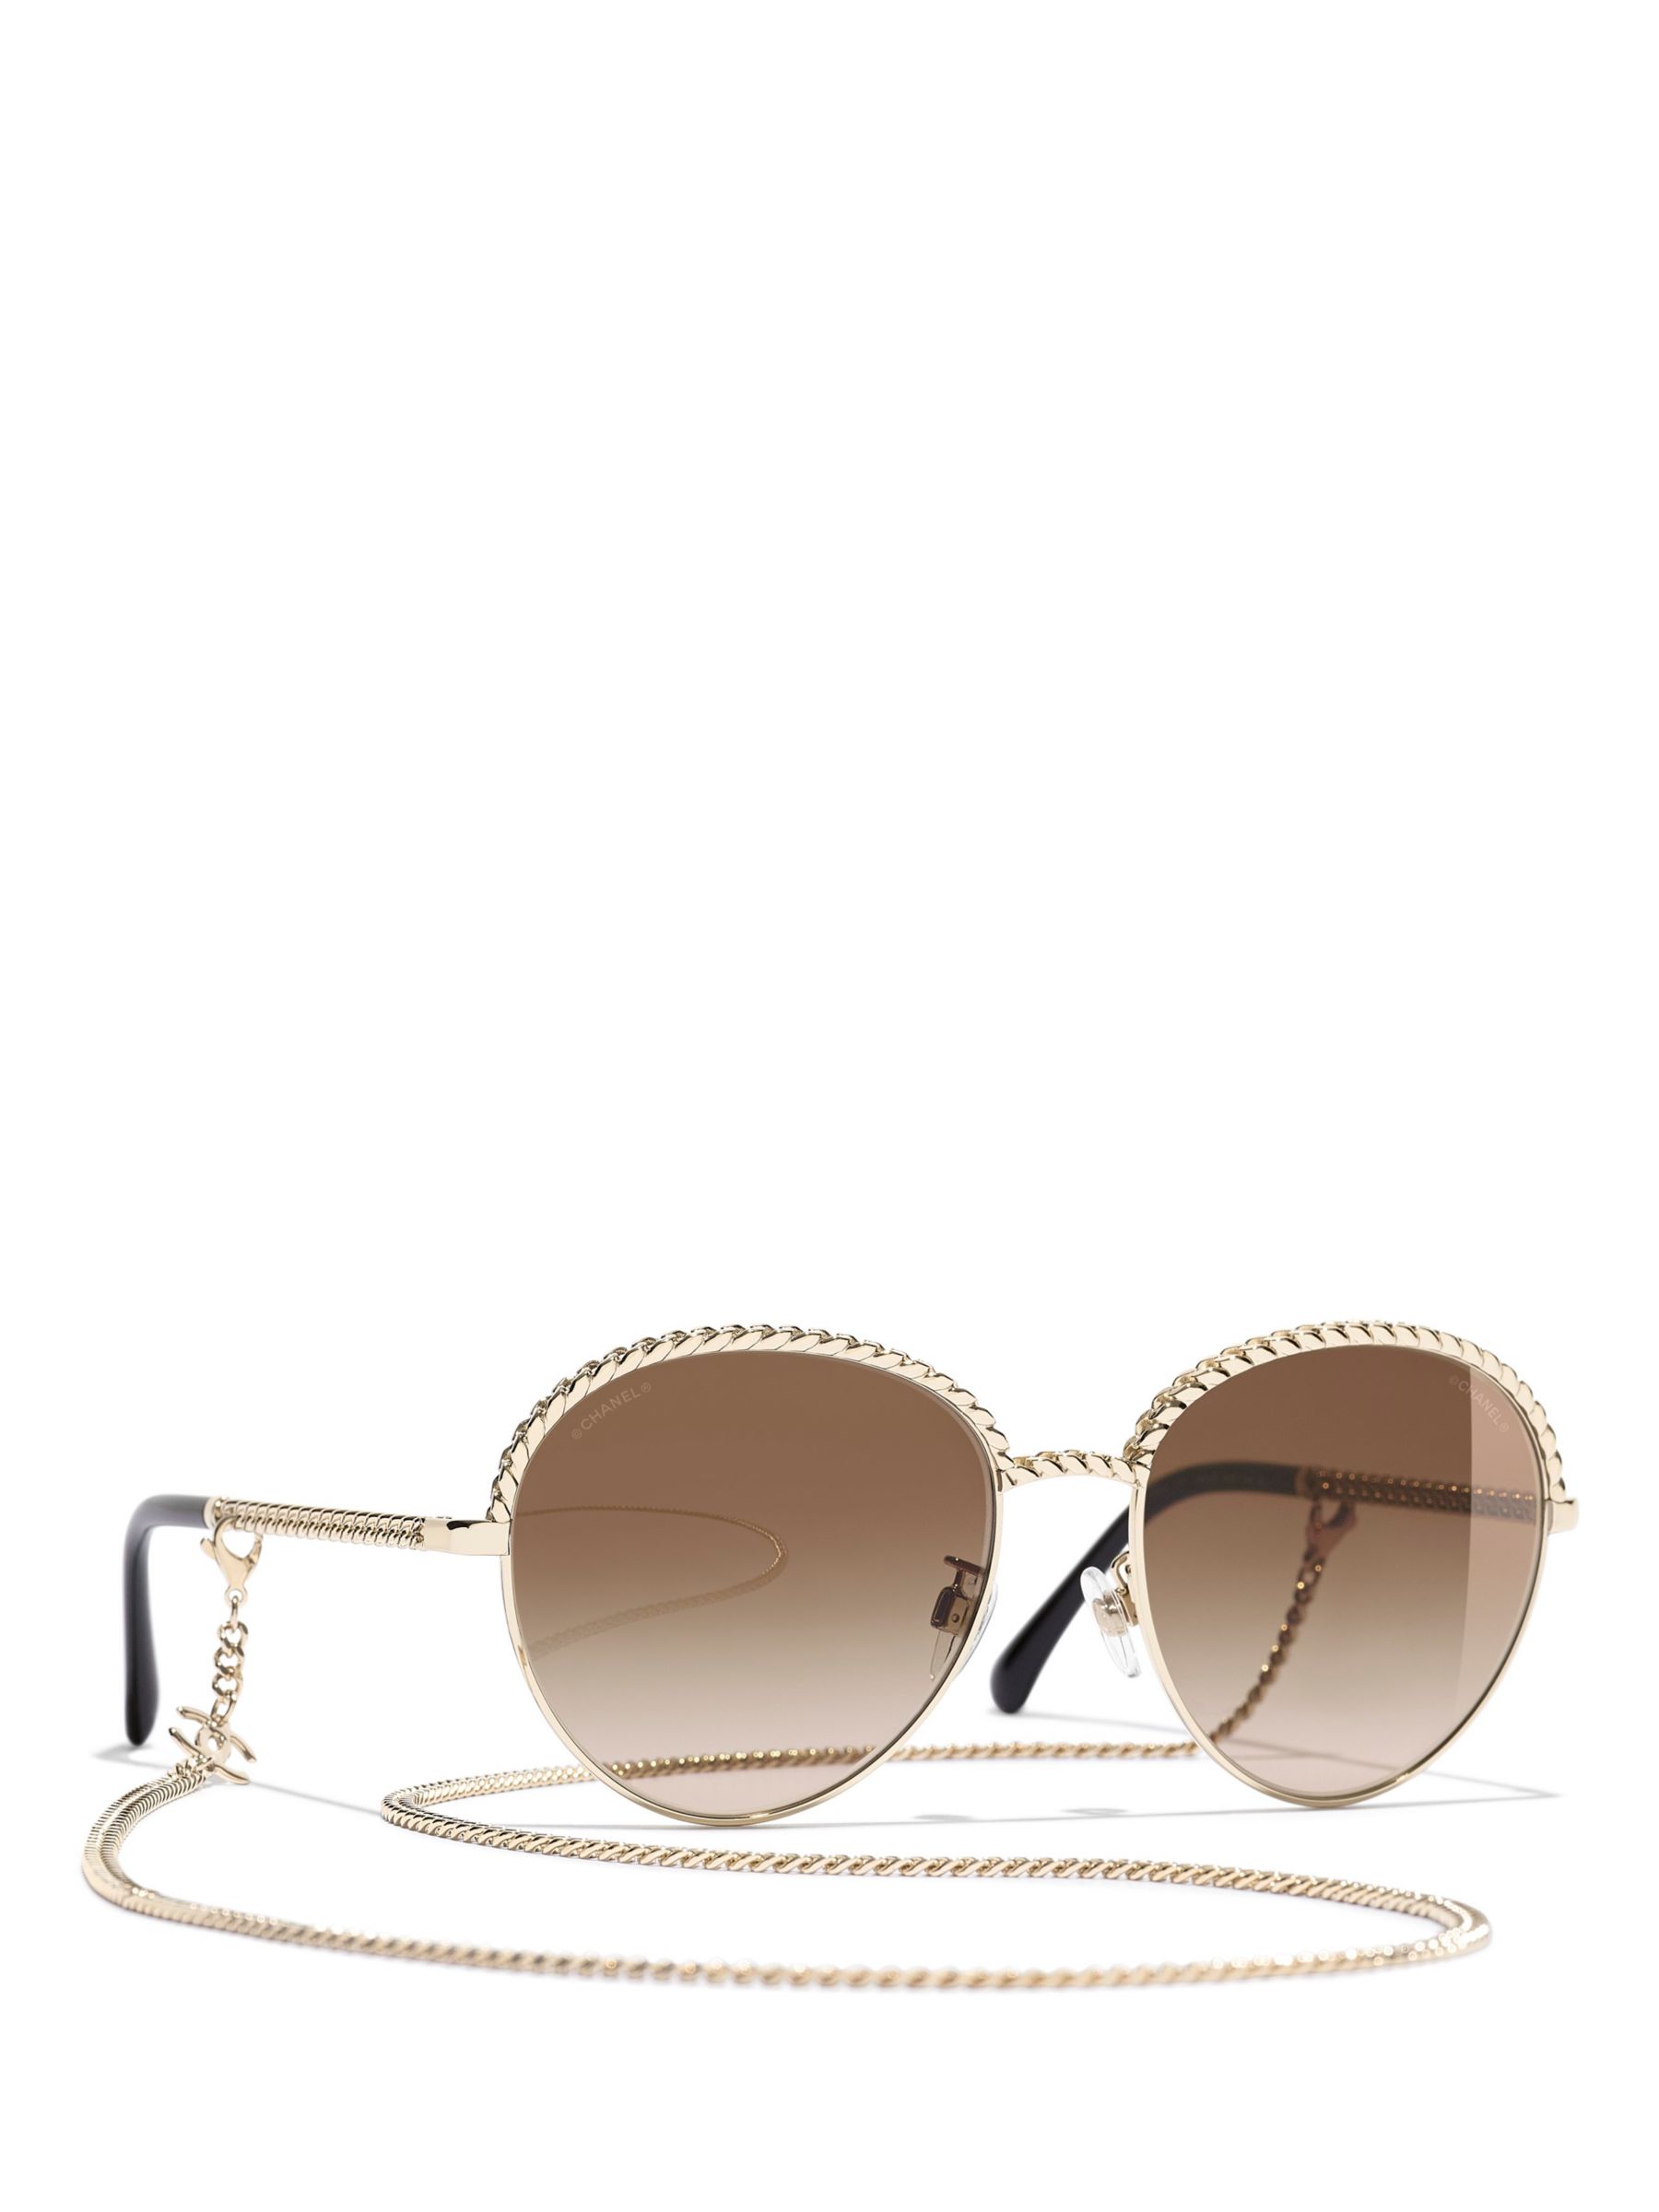 CHANEL Women's Sunglasses Gold